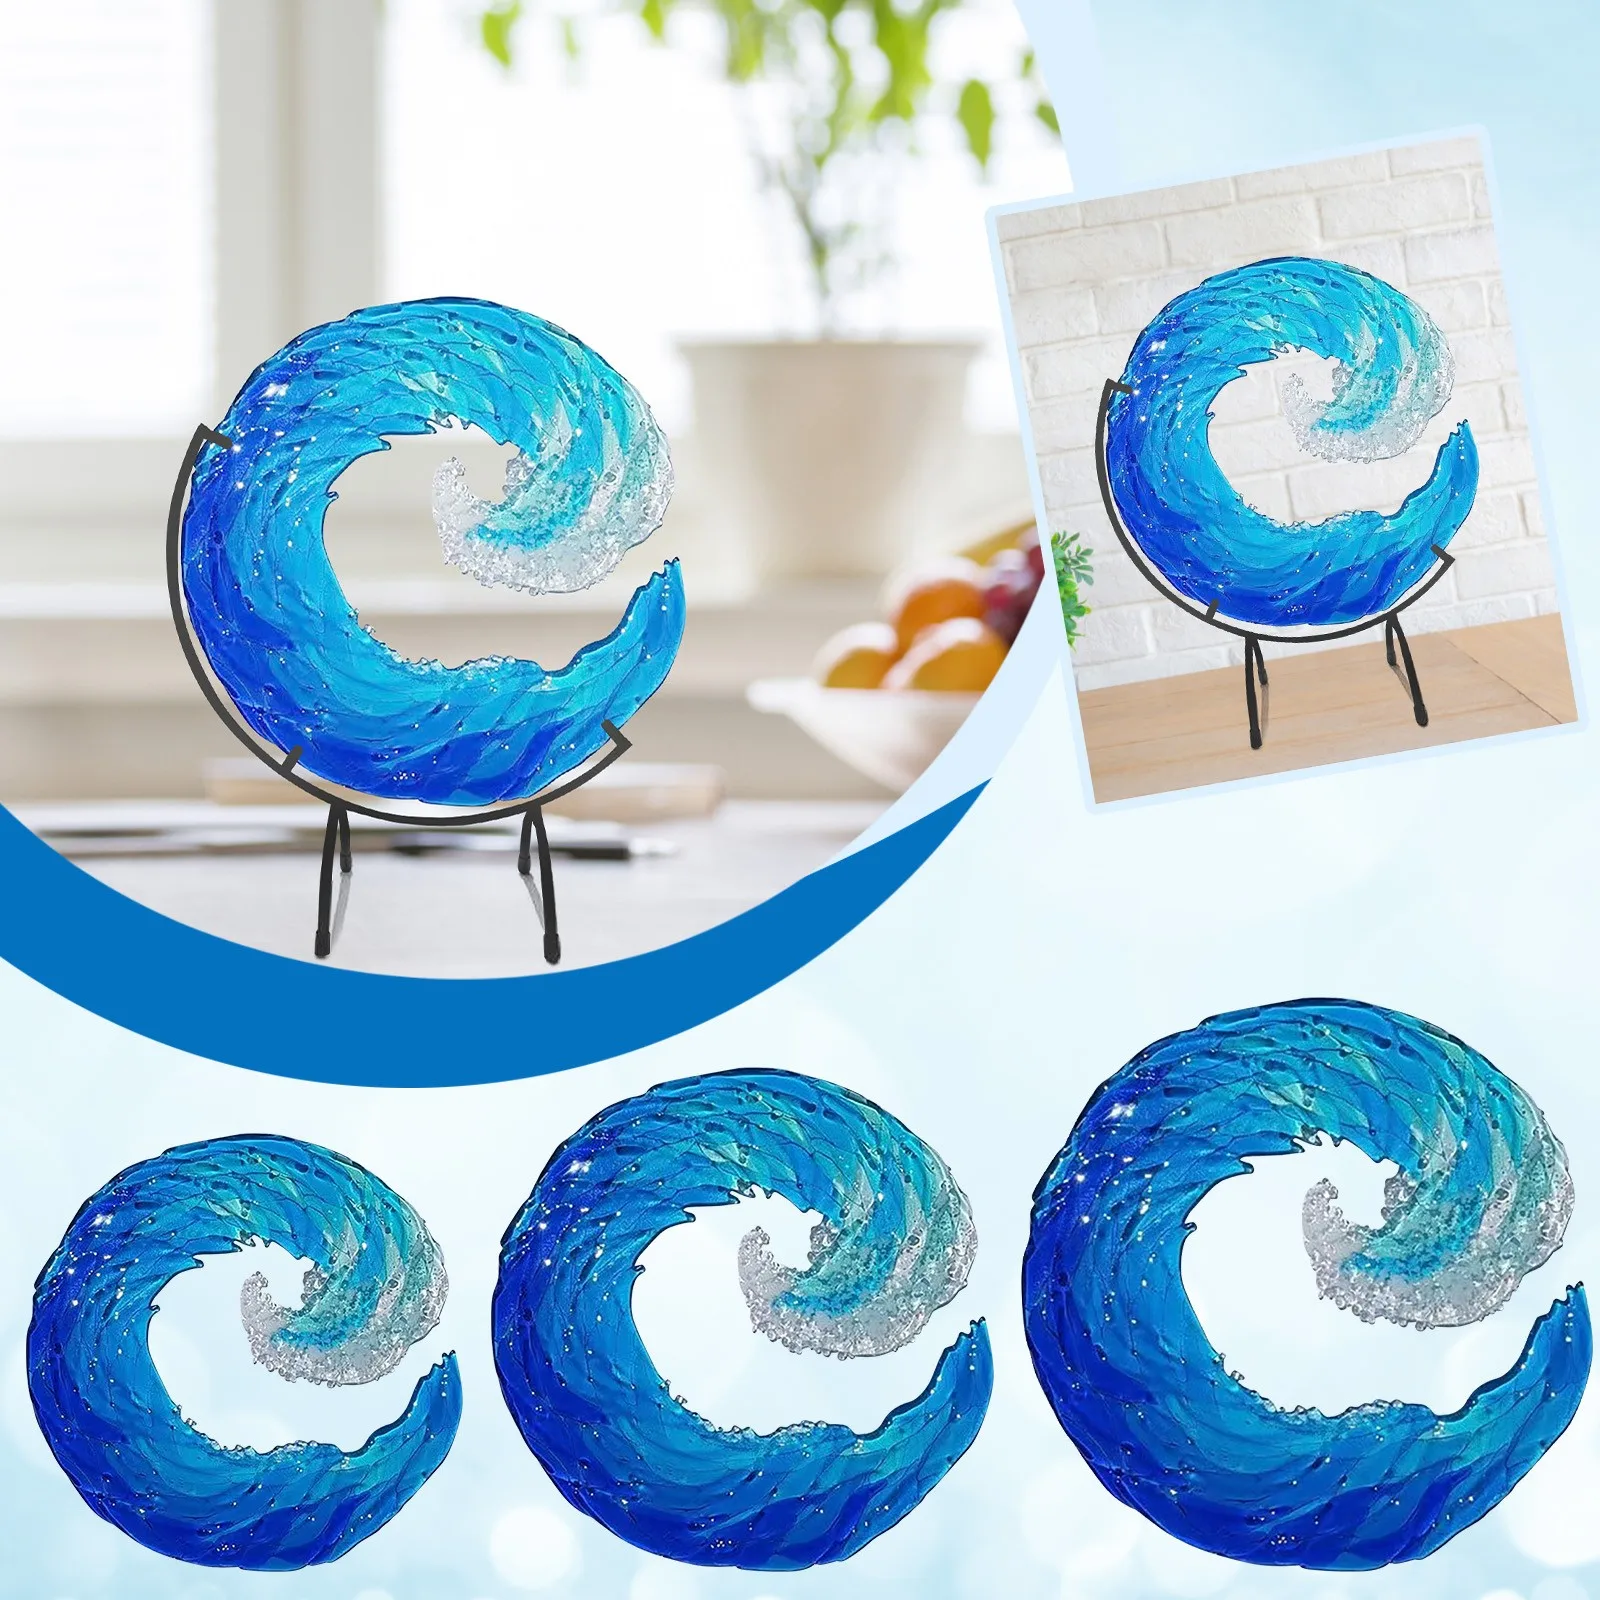 

Ocean Wave Fused Glass Sculpture Gradient Blue Wave Sculpture Ornament Decoration Waves Art Crafts Vases Flower Pot Gift Decor